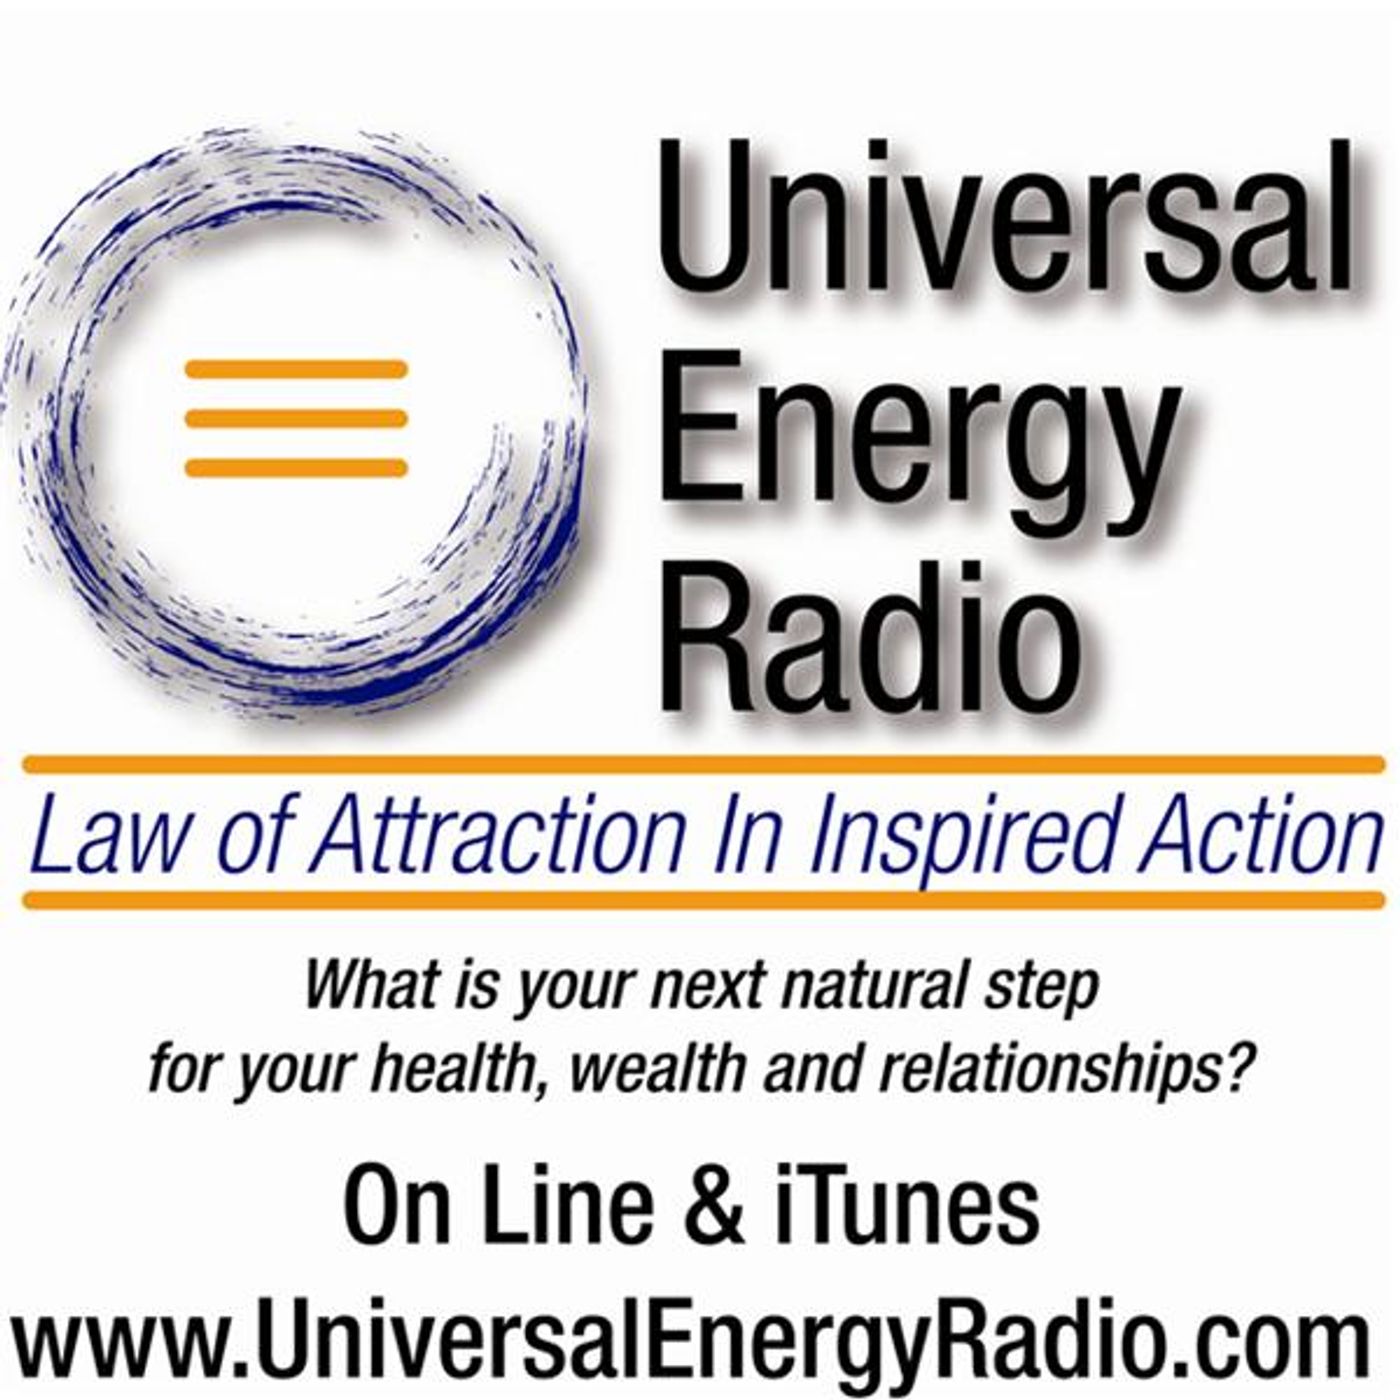 Universal Energy Radio